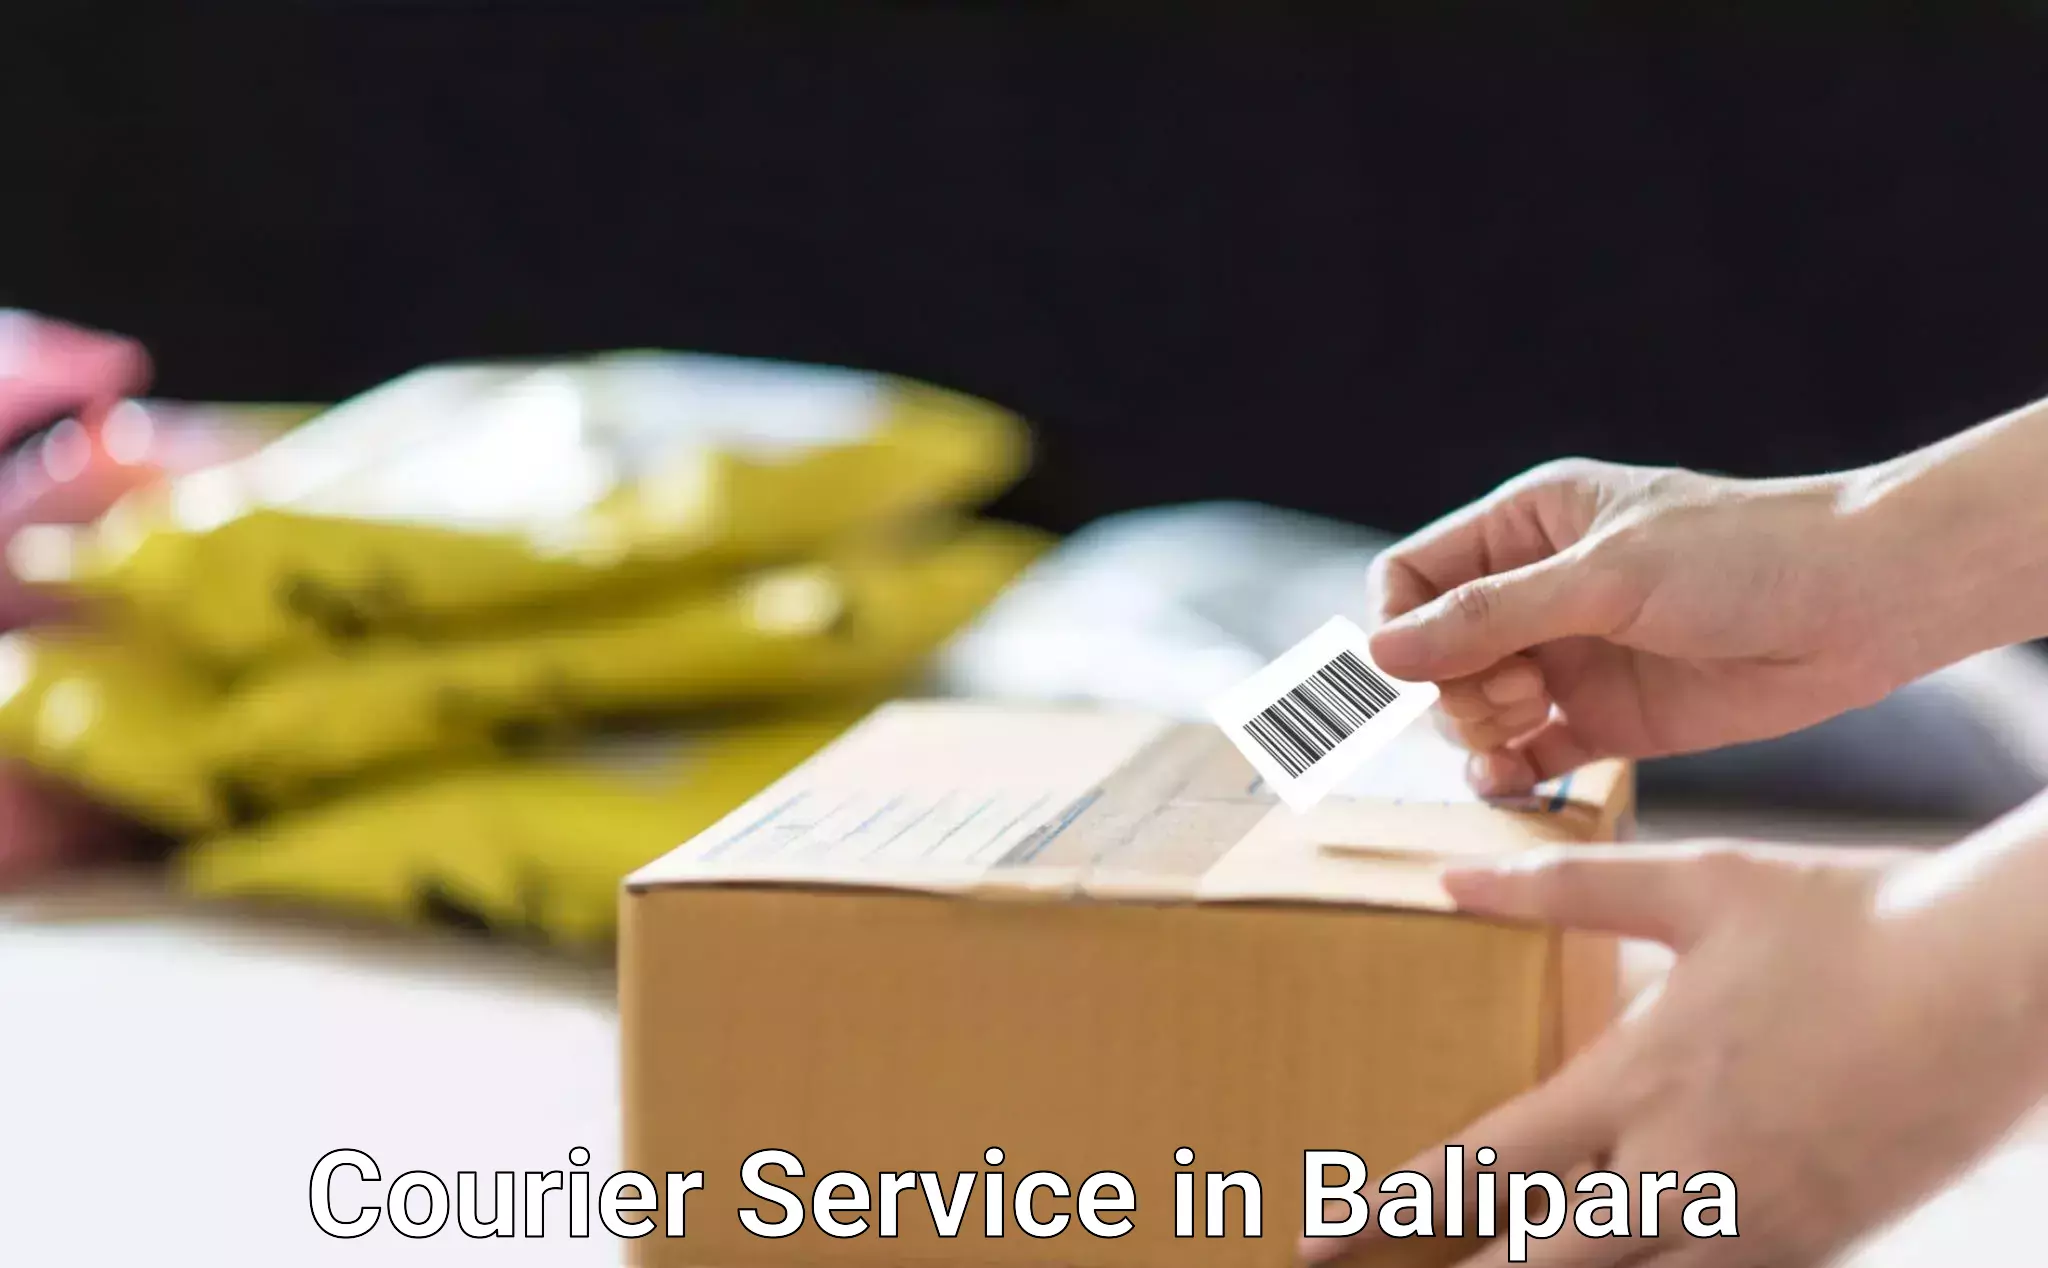 International logistics solutions in Balipara